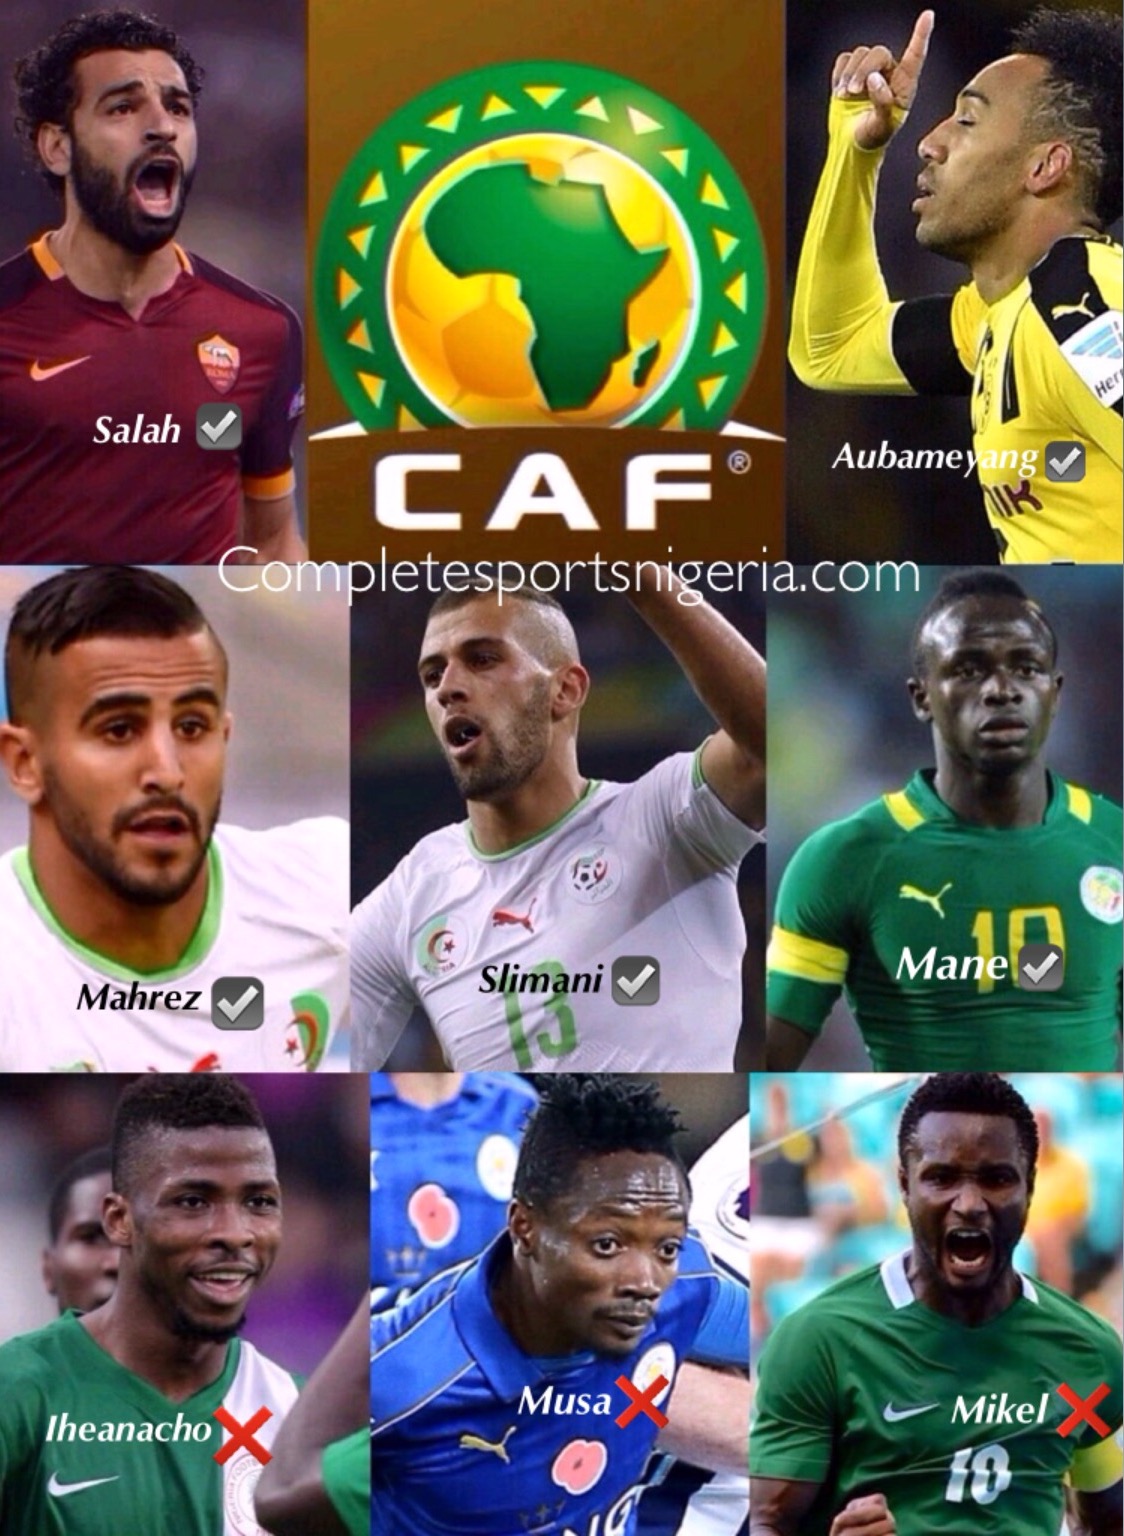 Slimani, Mahrez, Aubameyang, Mane Up For Glo-CAF Award; Mikel, Musa Snubbed